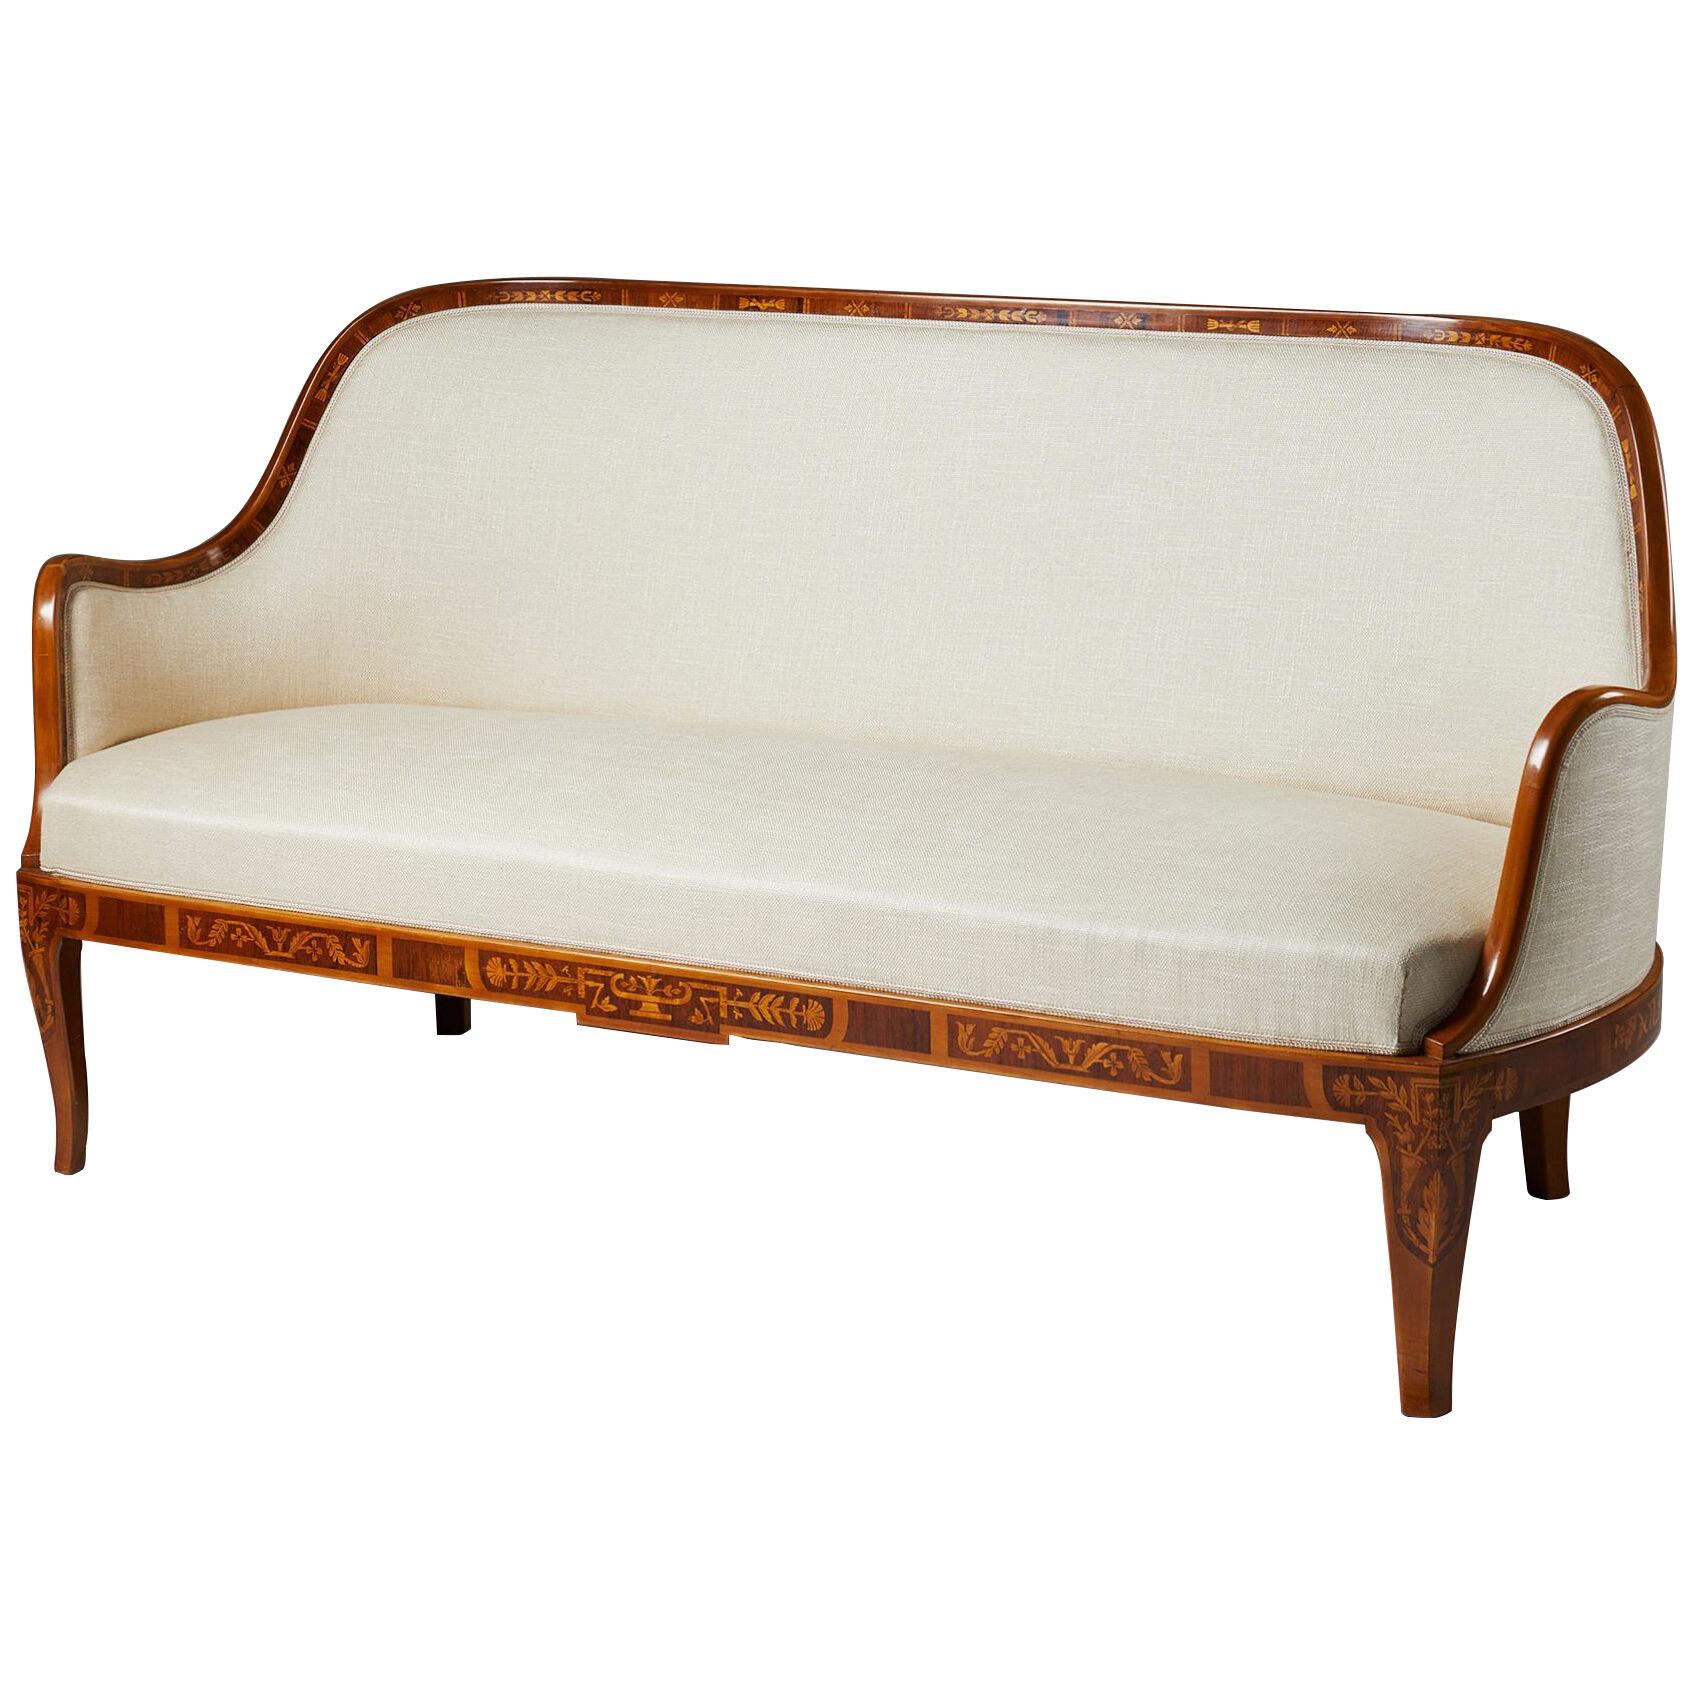 Swedish Grace sofa designed by Carl Malmsten, Sweden. 1929.